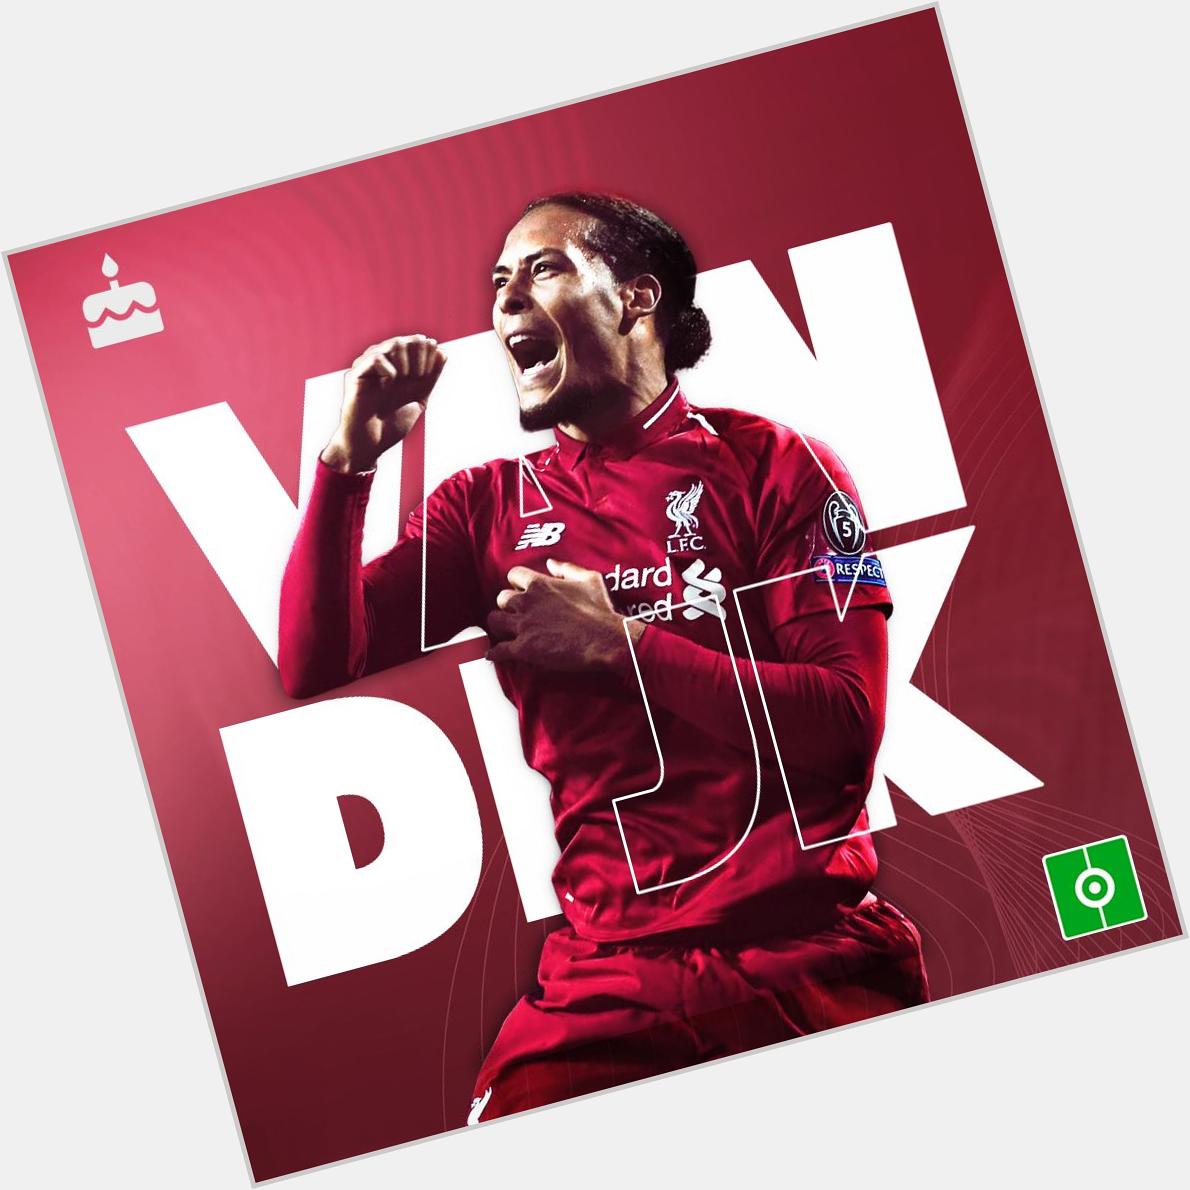 Happy 28th birthday to Virgil van Dijk - one of the best defenders in the world       